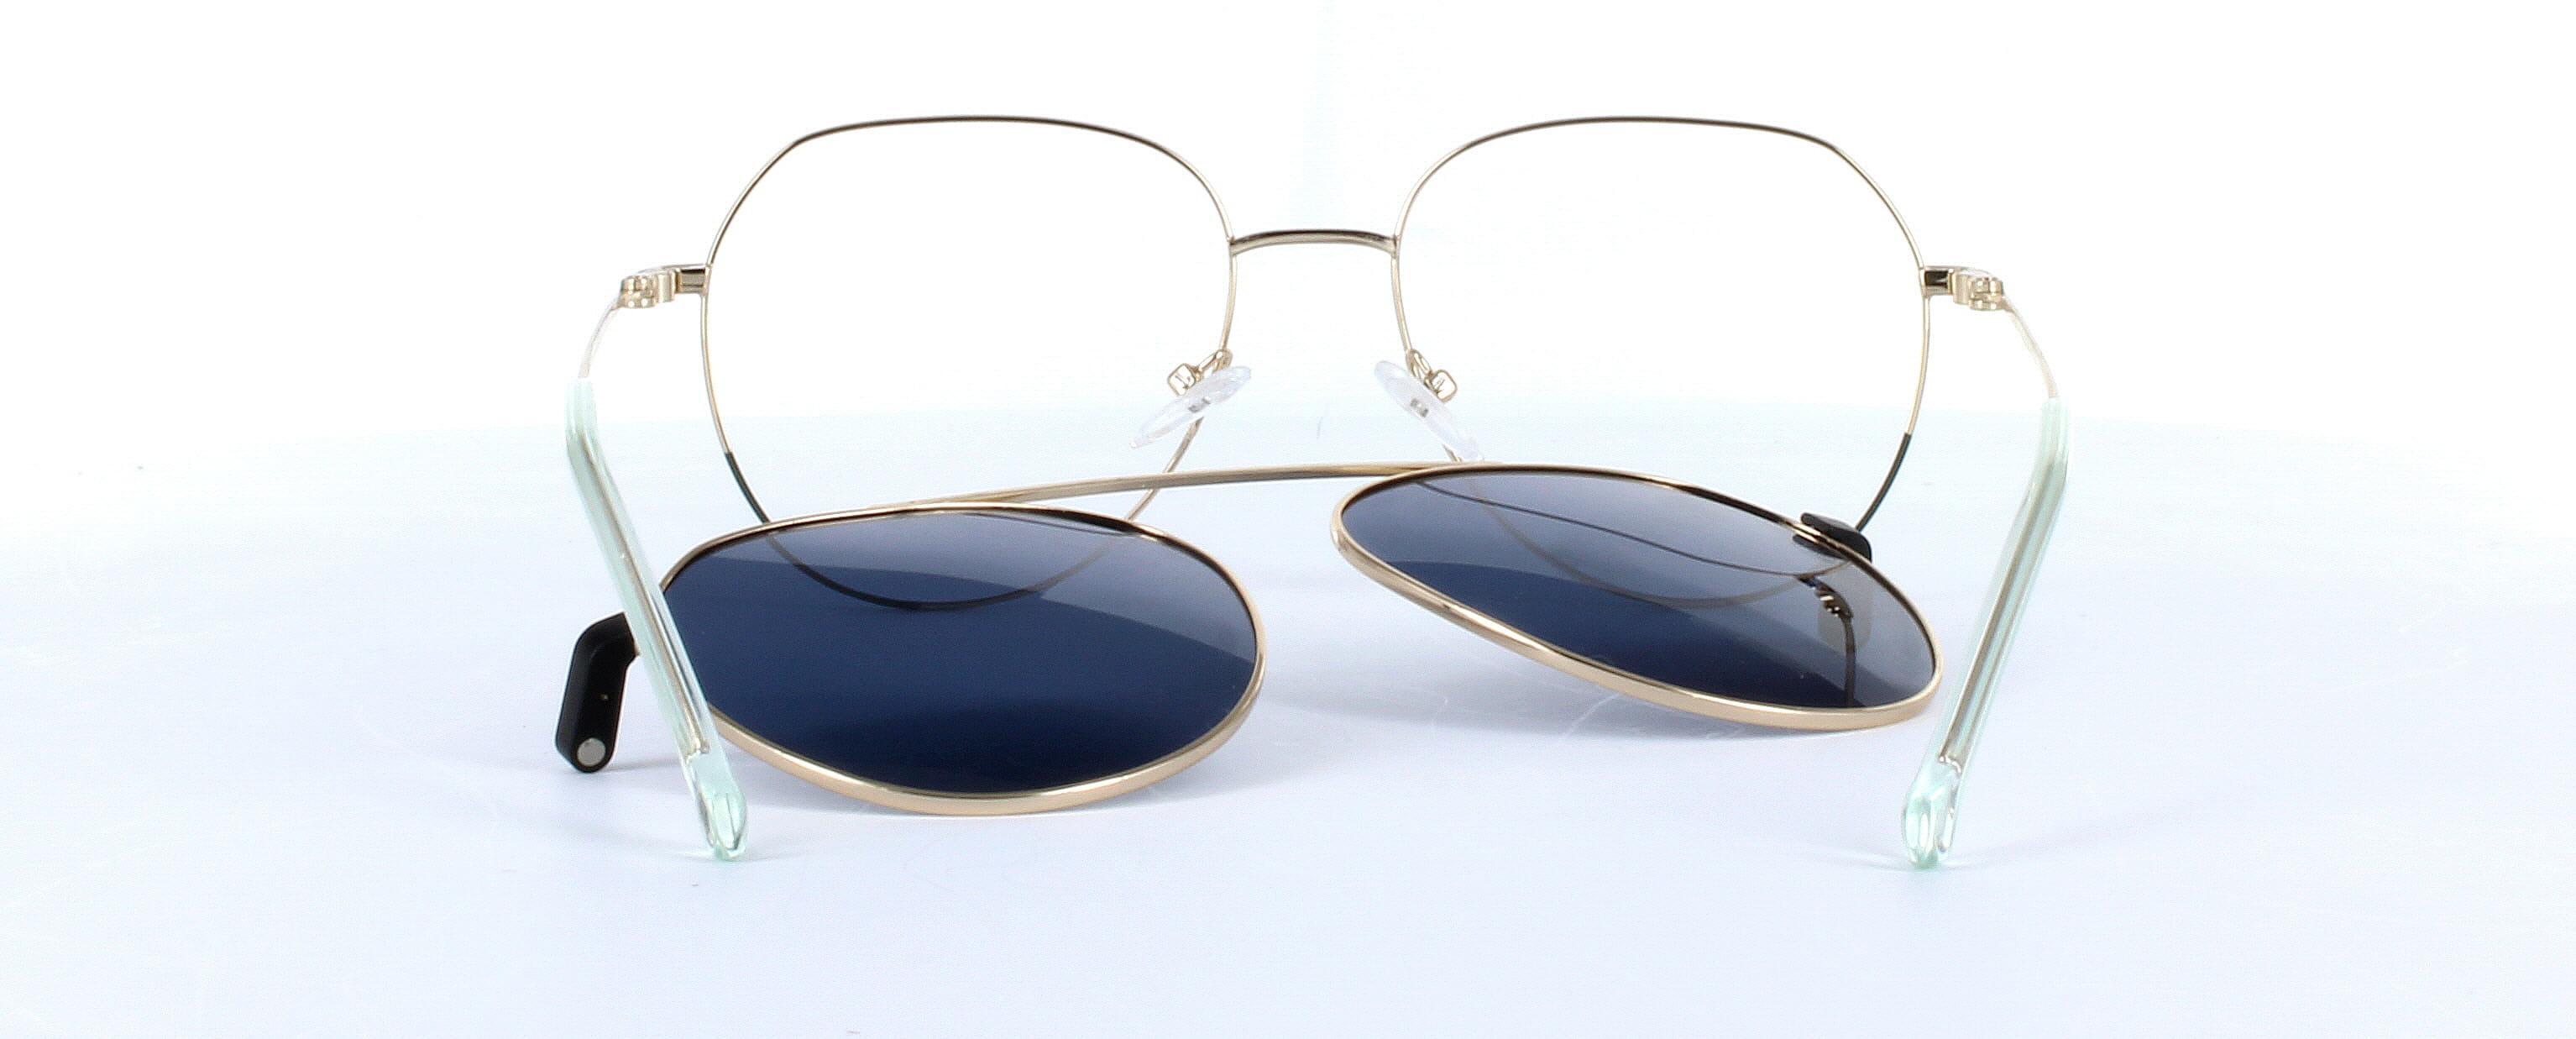 Eyecroxx 612 Gold and Black Full Rim Metal Glasses - Image View 3